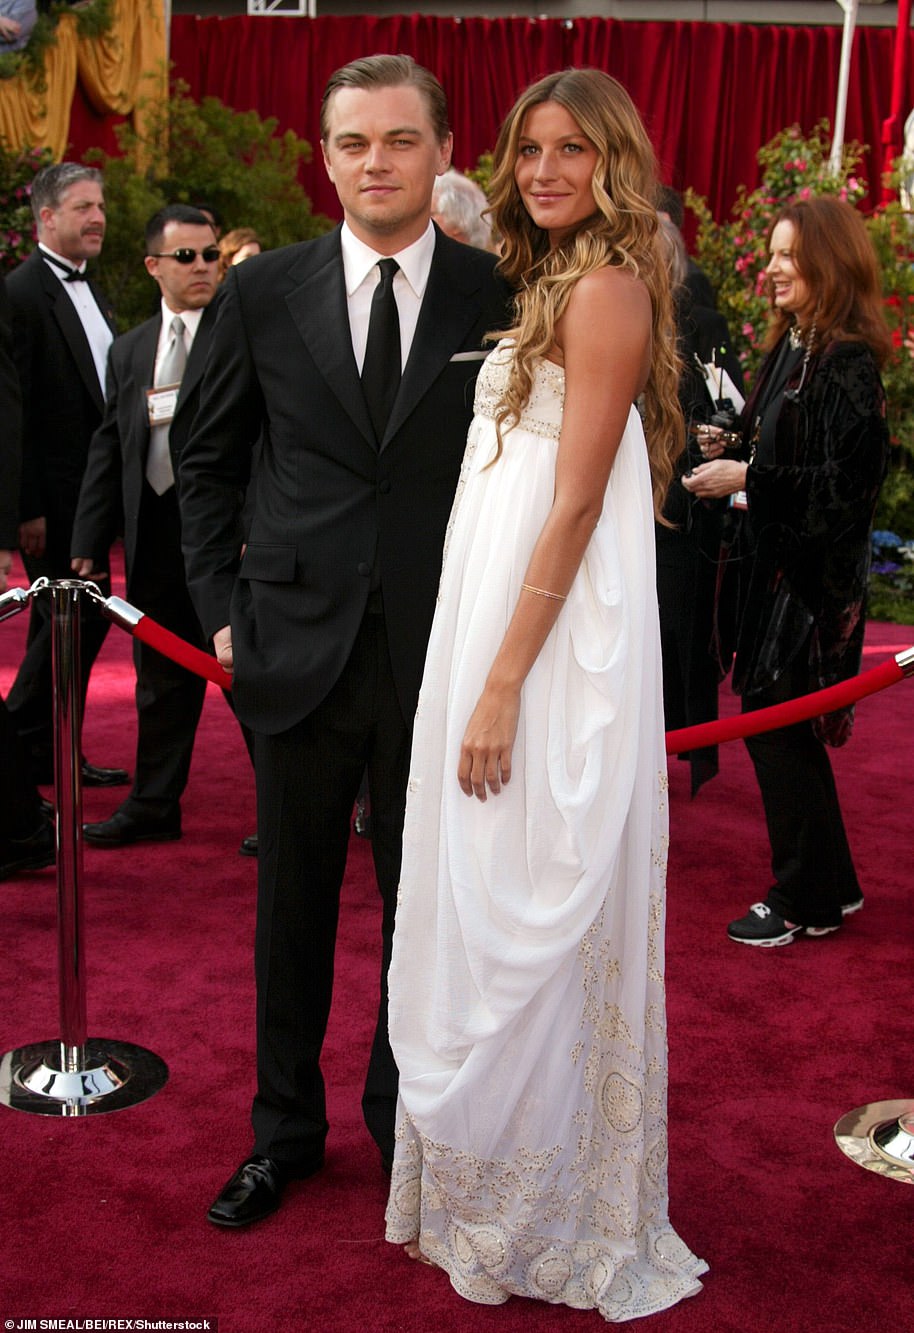 Gisele and Leonardo at the 2005 Academy Awards ceremony